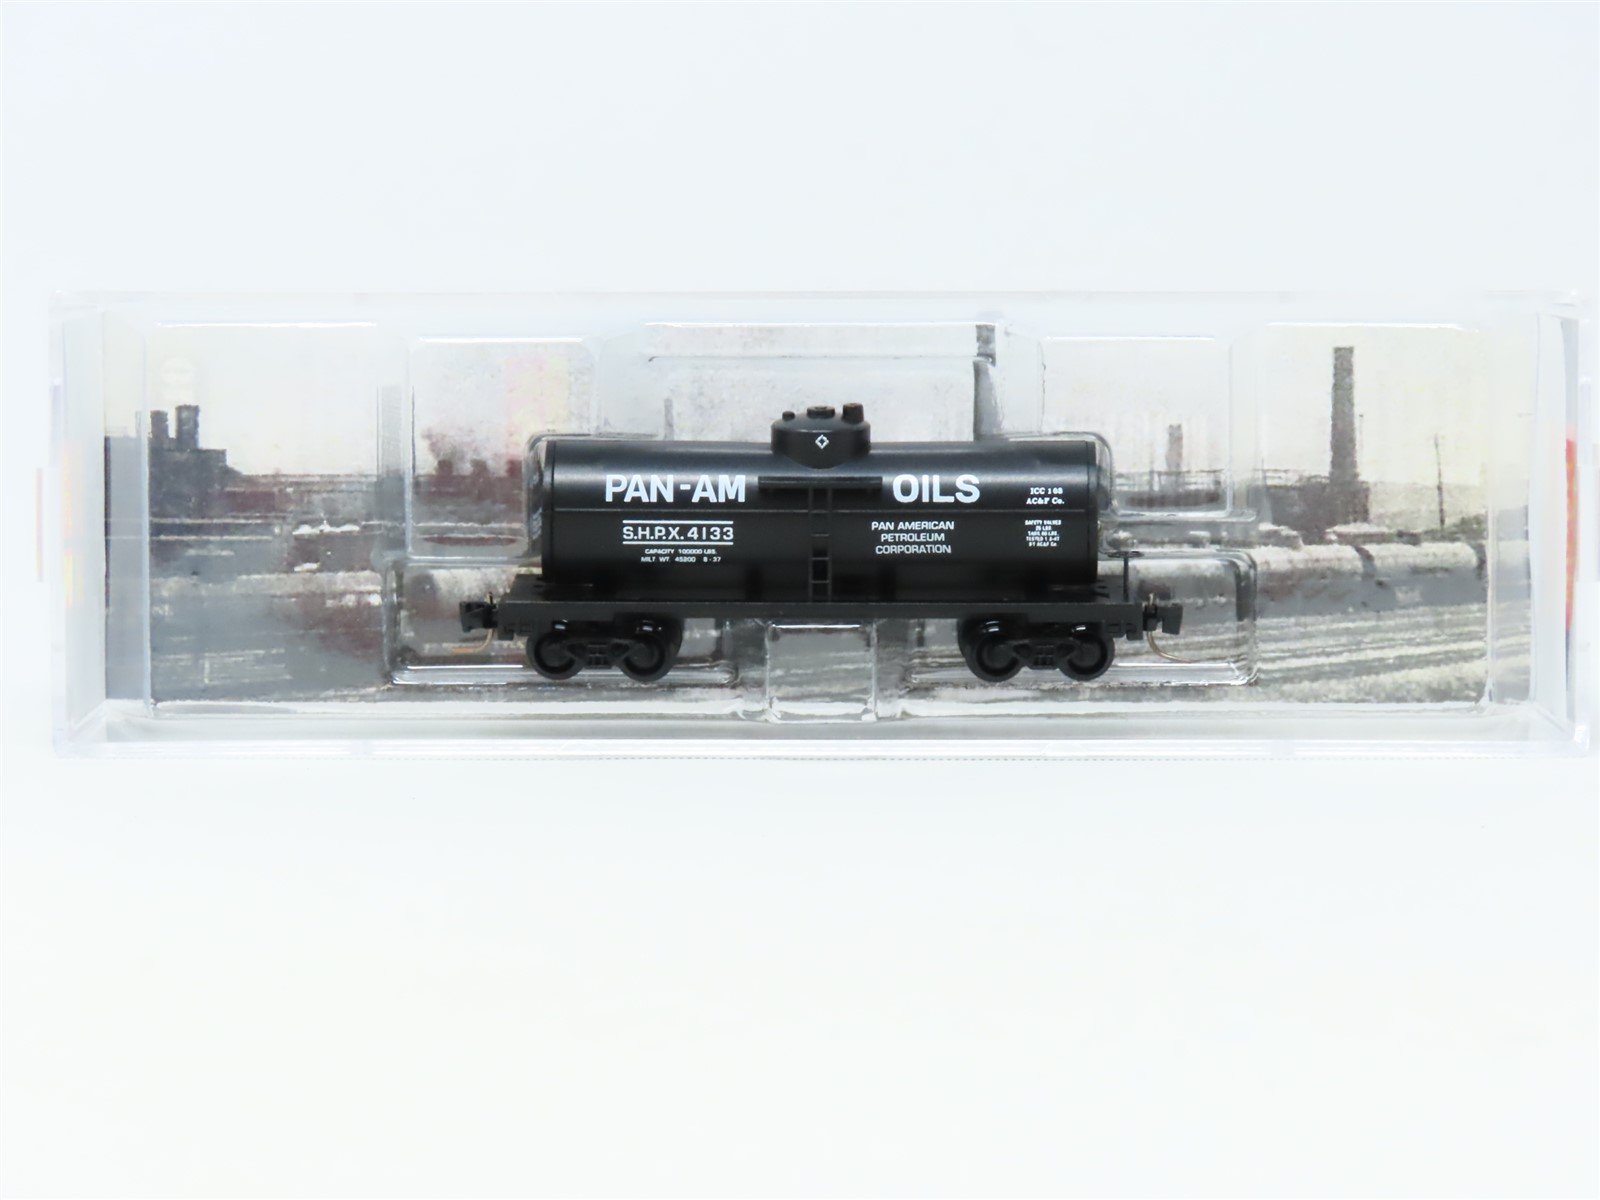 Z Scale Micro-Trains MTL 530 00 408 SHPX Pan-Am Oils Single Dome Tank Car #4133